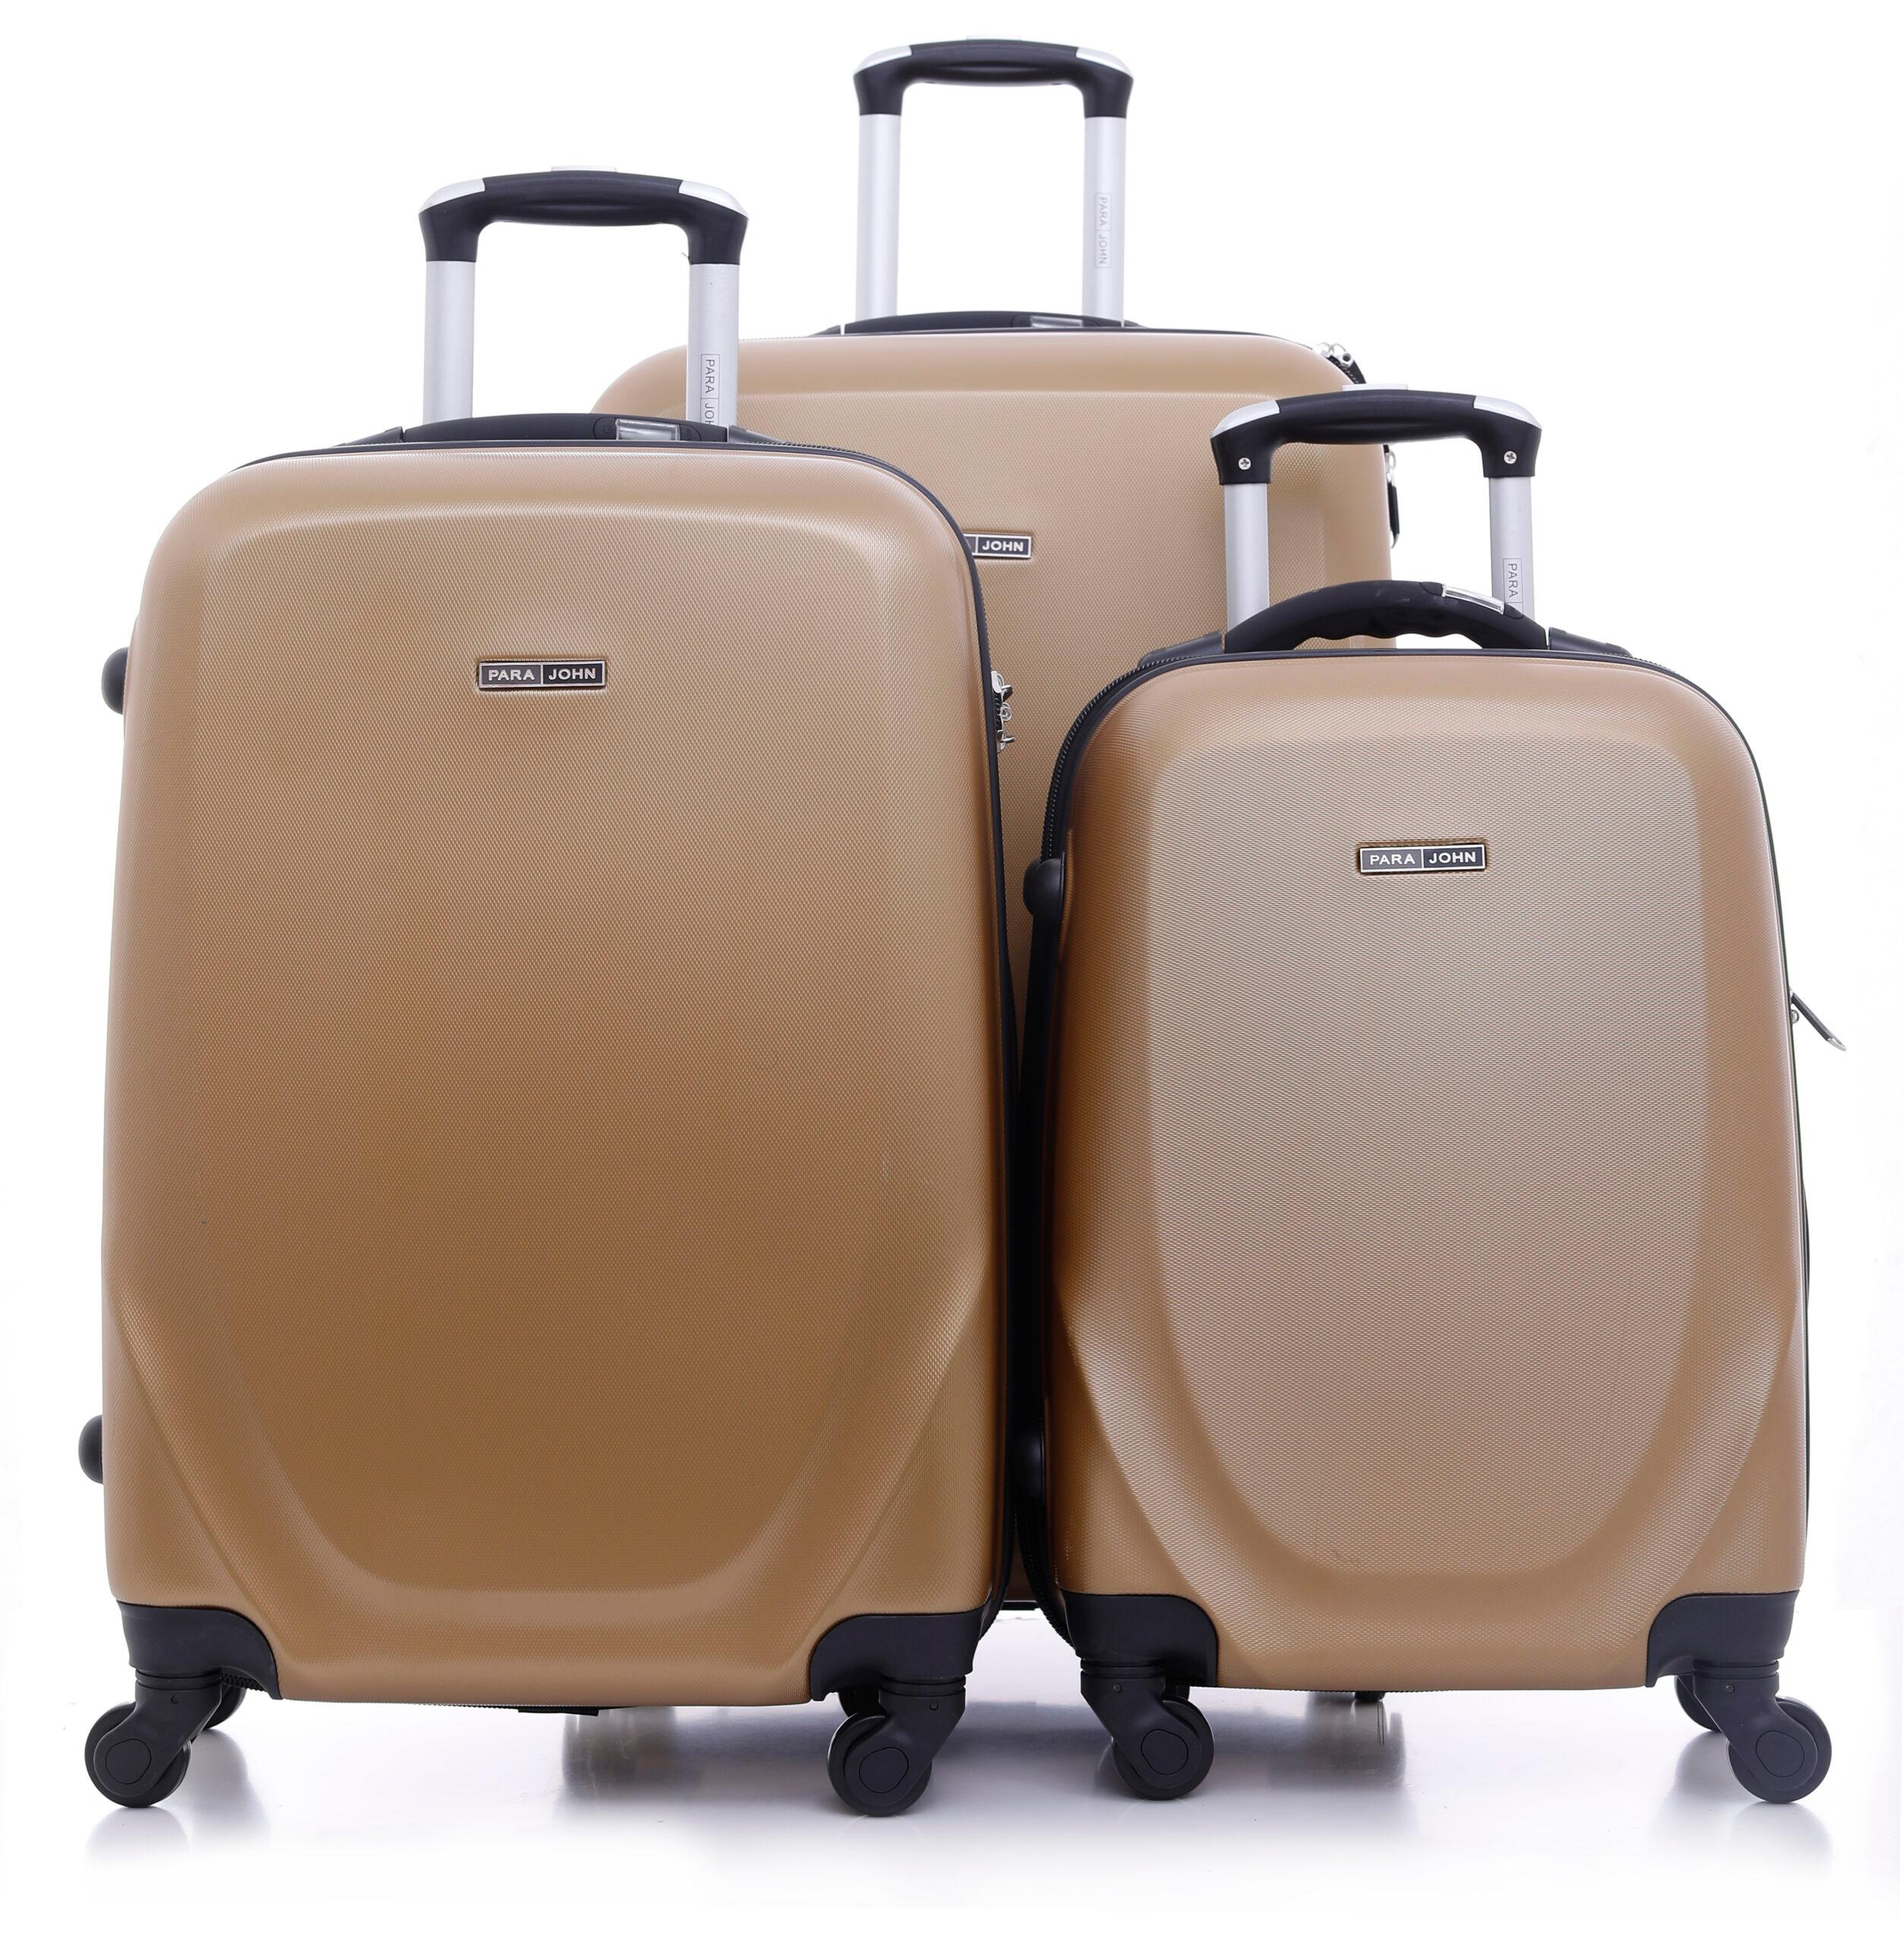 طقم حقائب سفر 3 حقائب بعجلات دوارة (20 ، 24 ، 28) بوصة ذهبي PARA JOHN - 3 Pcs Travel Luggage Suitcase - ABS Hard Shell Luggage (20'' 24'' 28'')